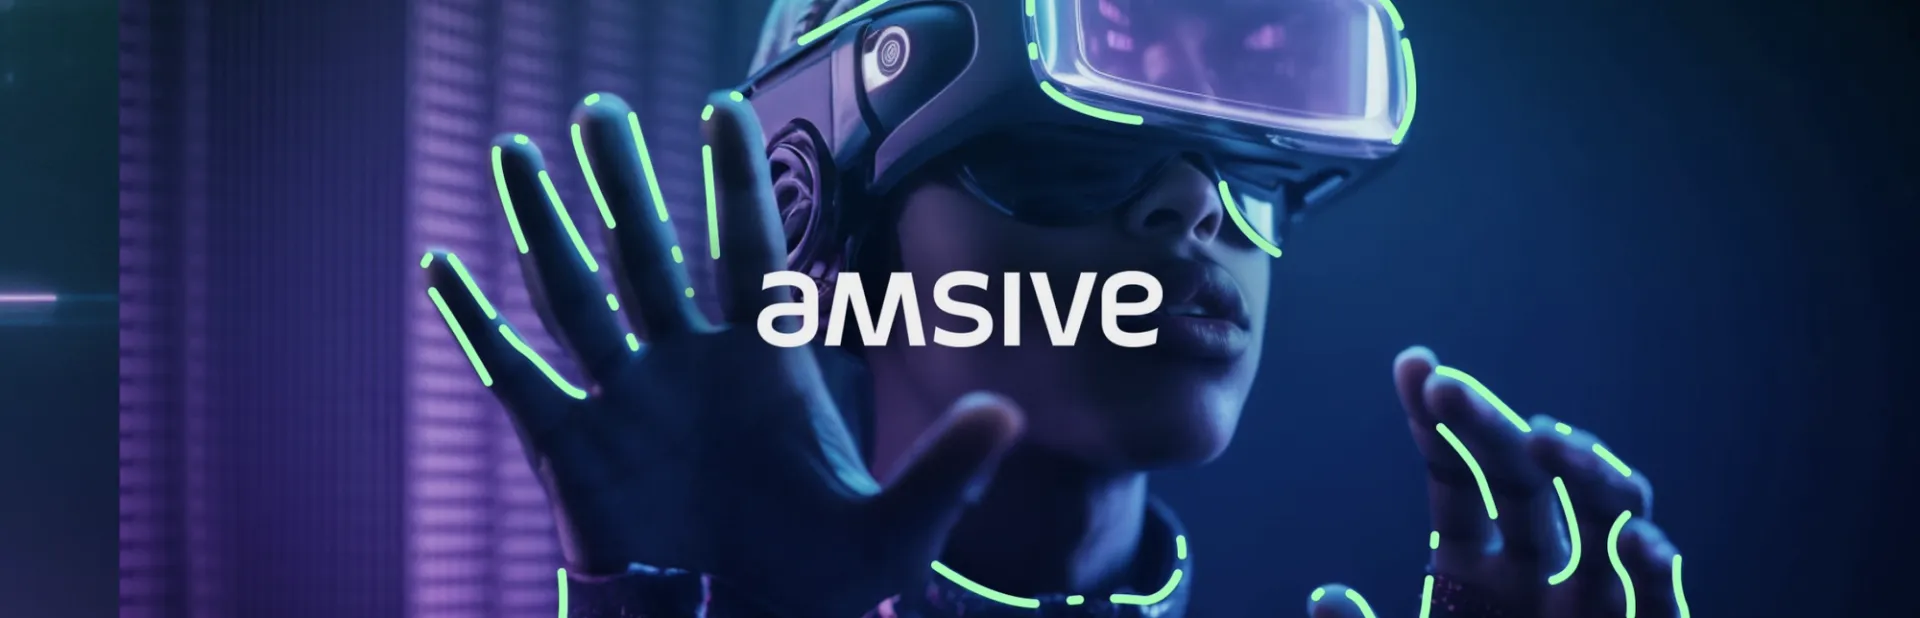 Amsive’s distinctive brand imagery